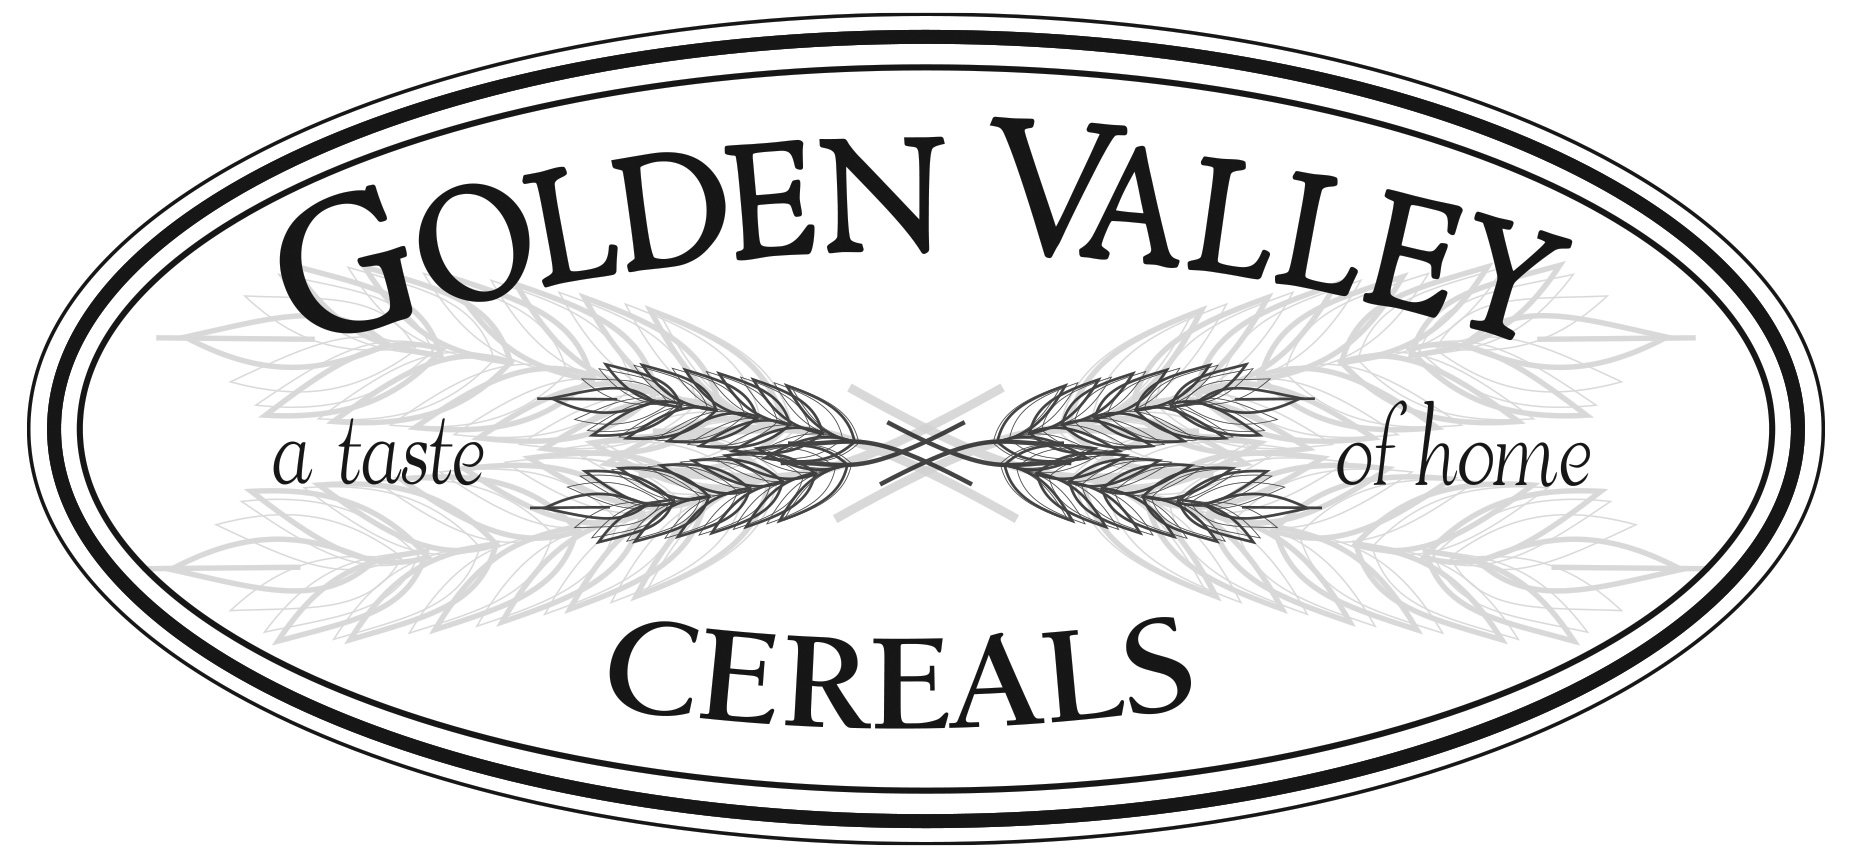  GOLDEN VALLEY CEREALS A TASTE OF HOME